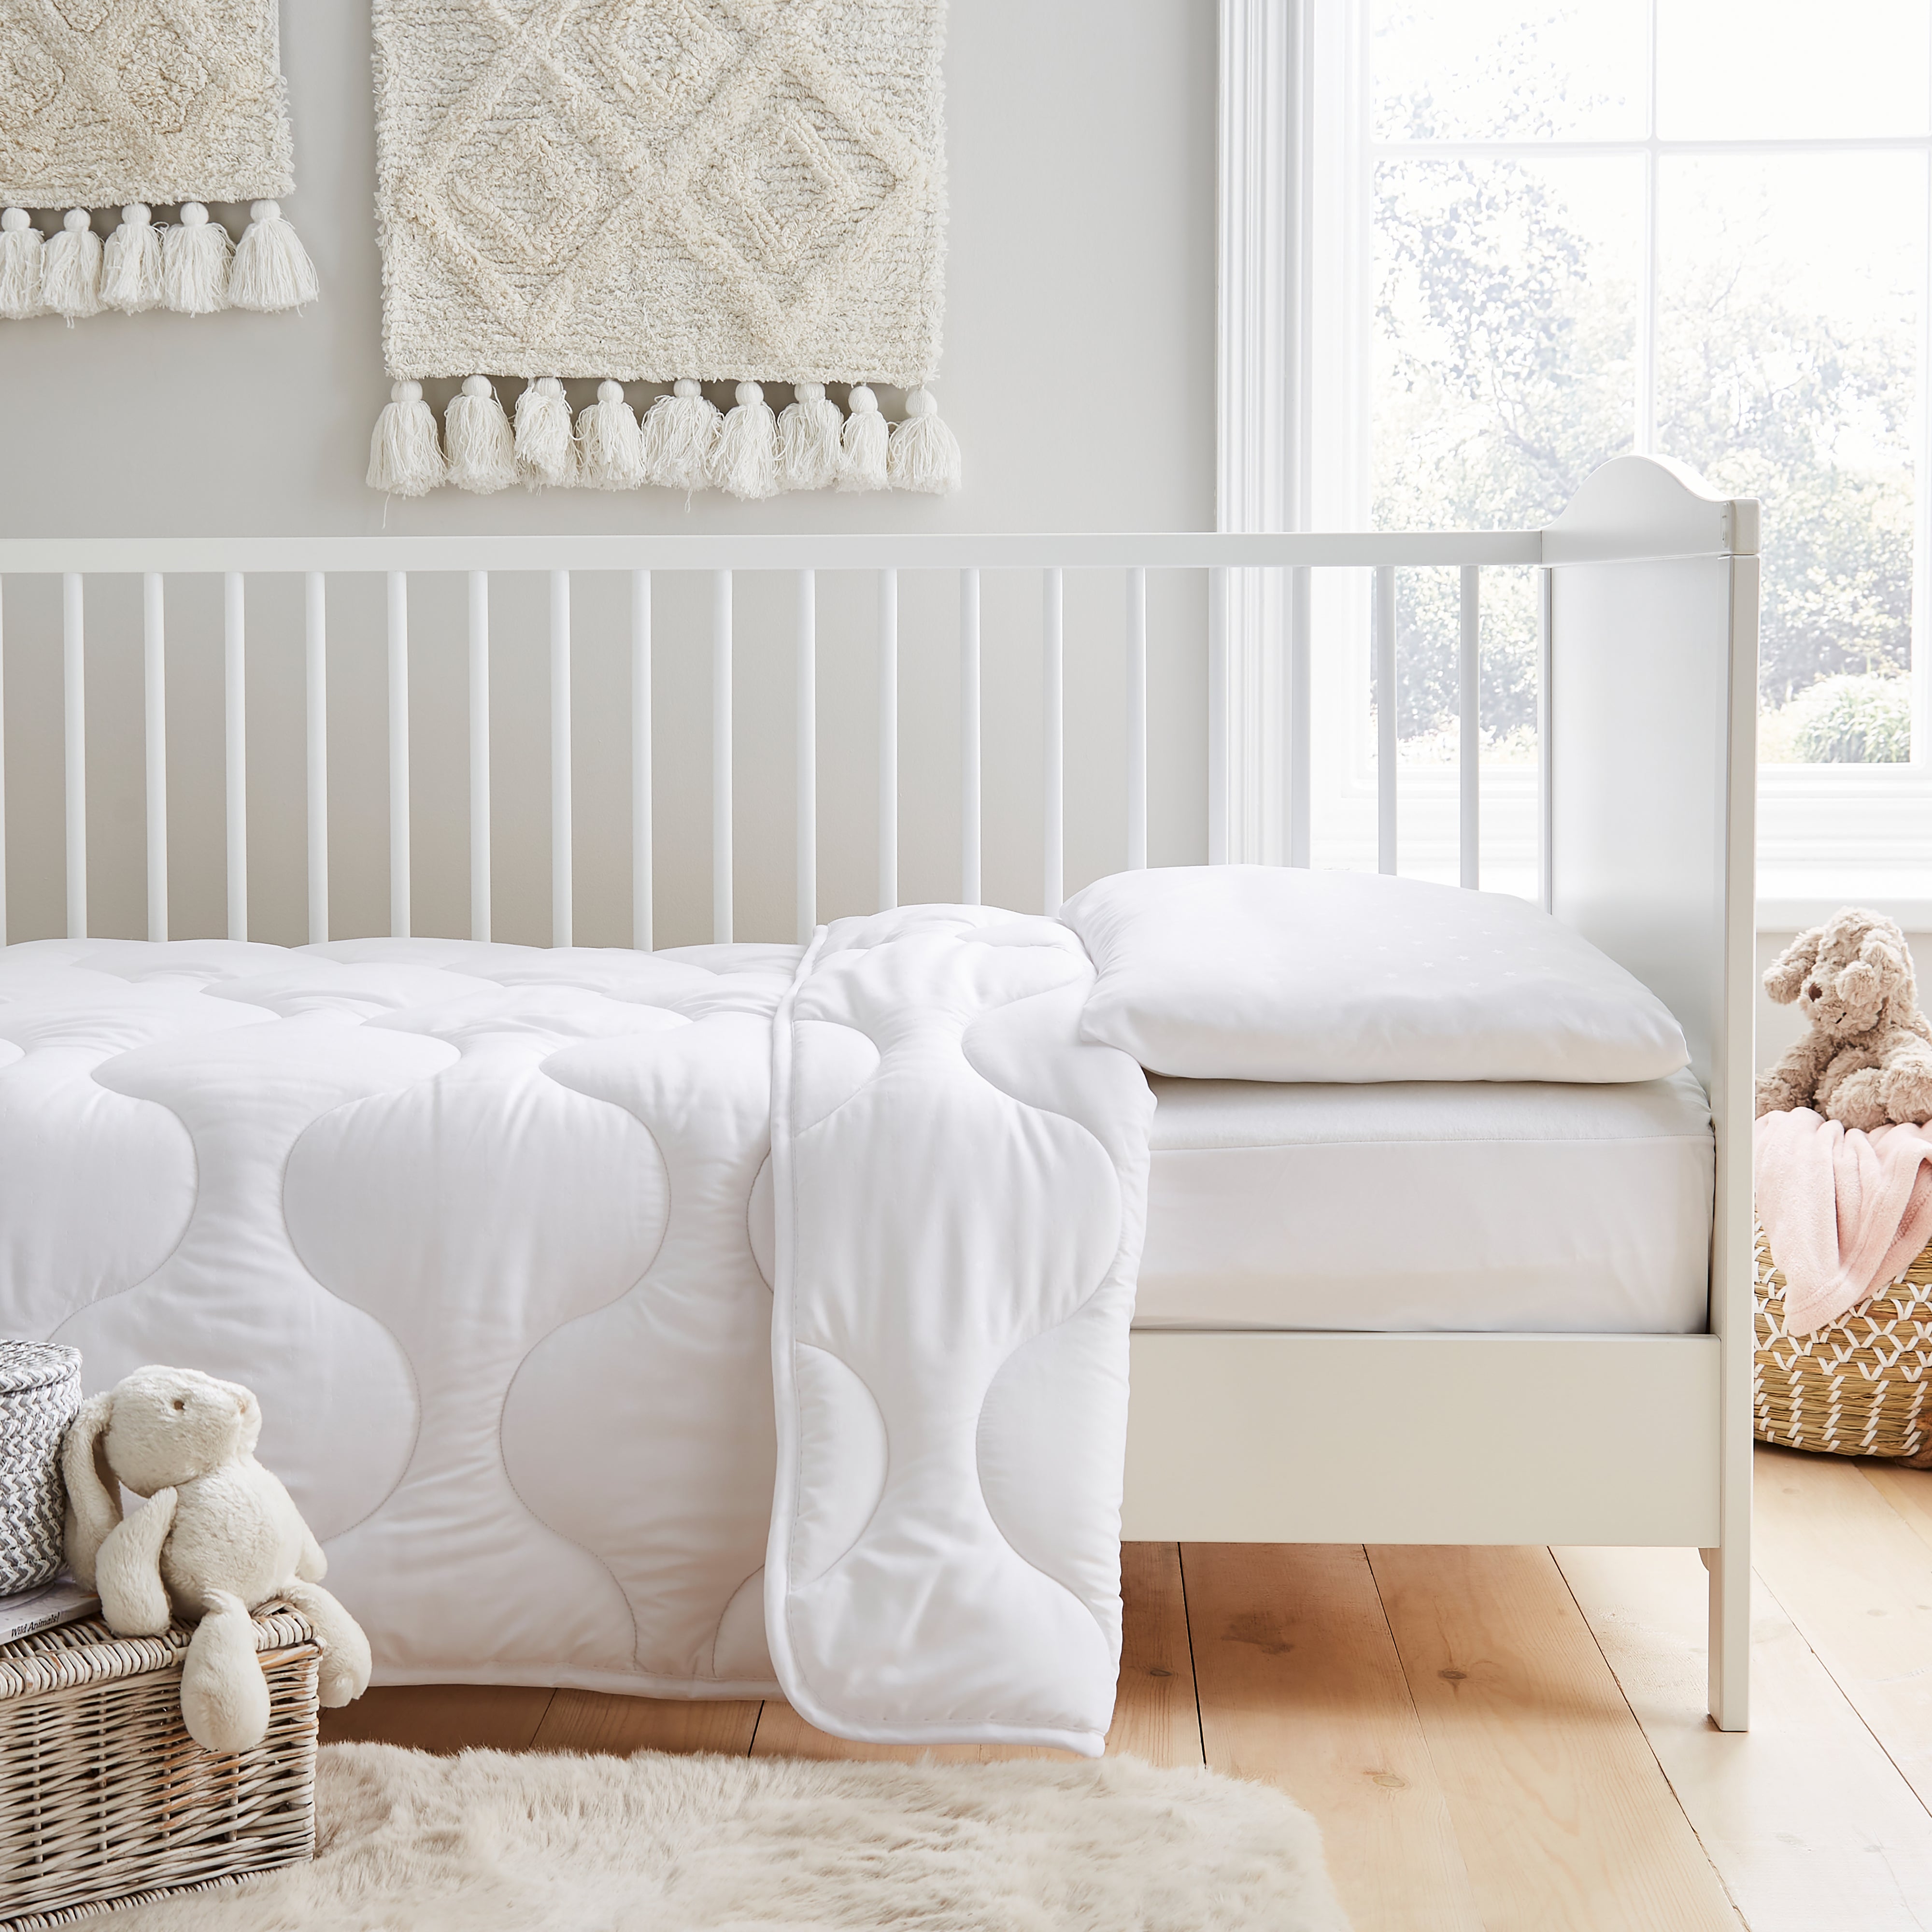 Fogarty Little Sleepers Soft Touch 7 Tog Spring/Summer Cot Bed Duvet & Pillow Set